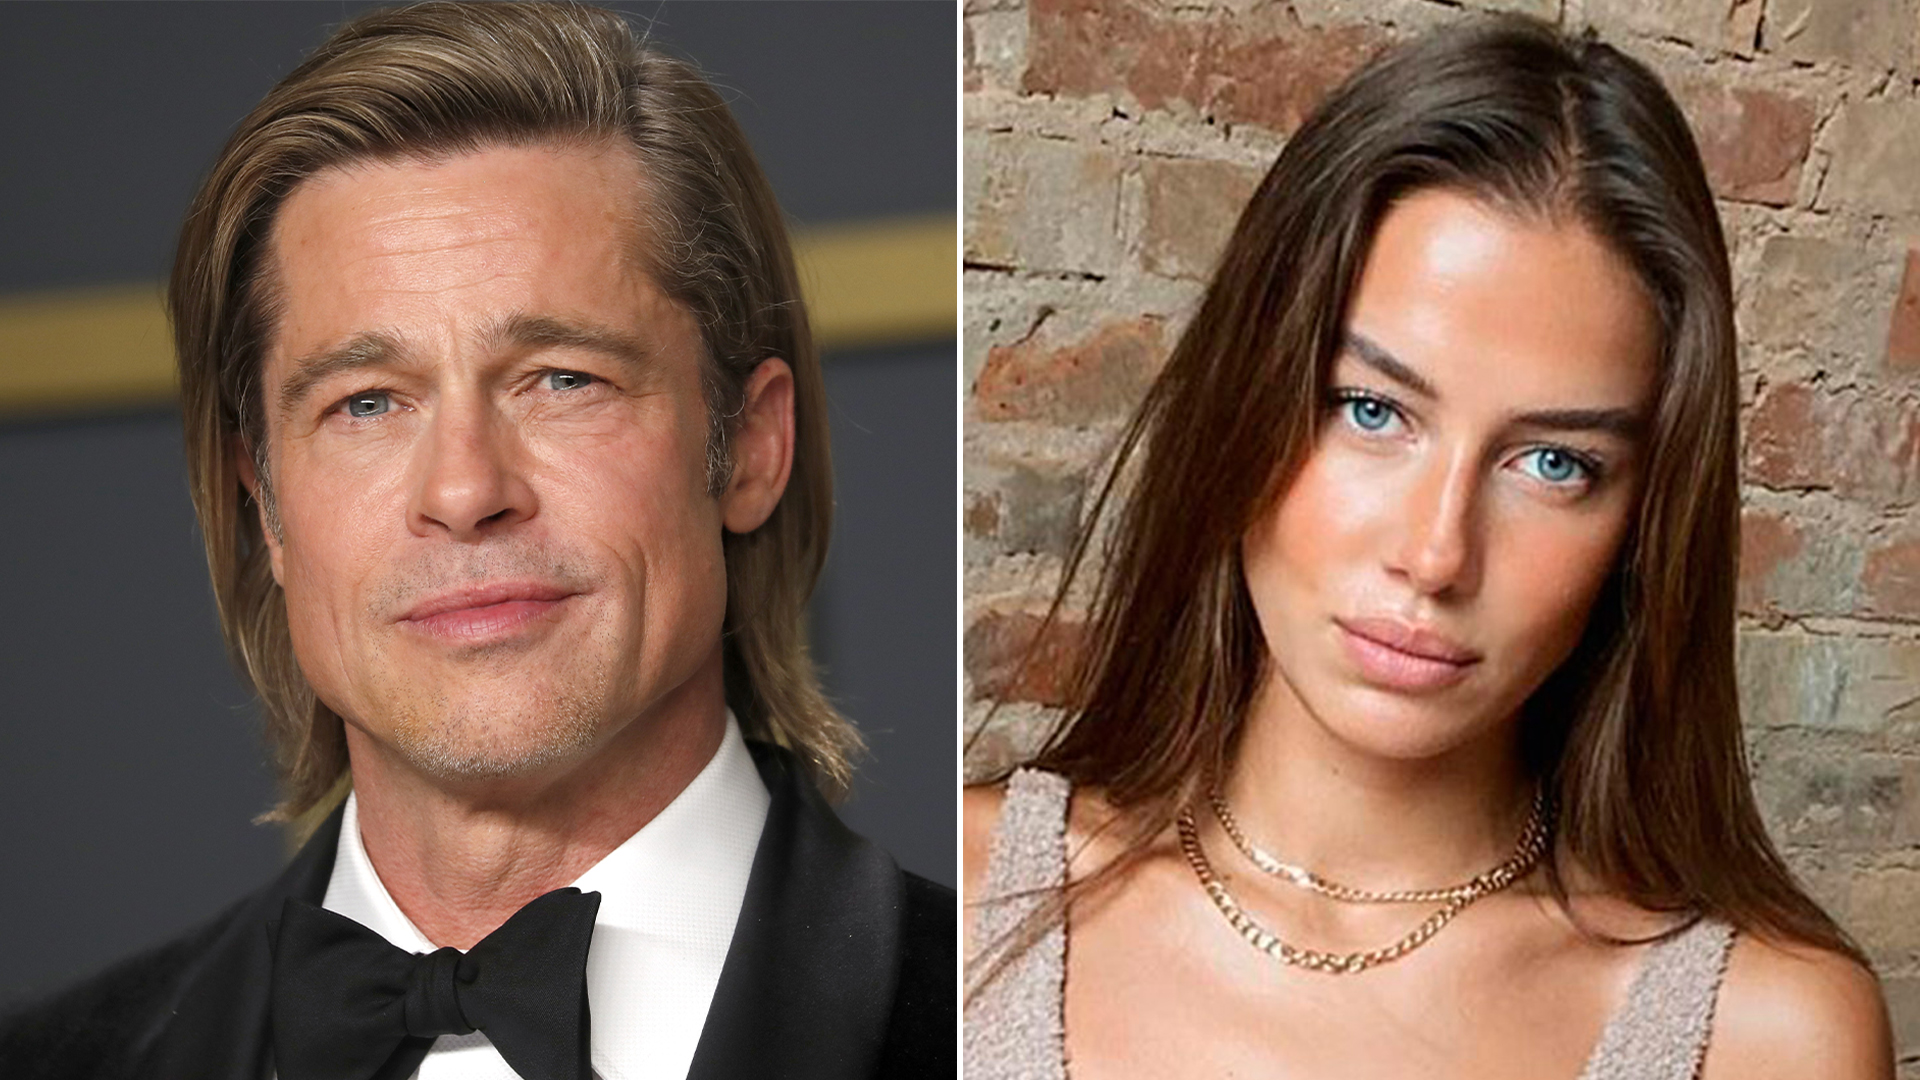 Con dedicatoria a Angelina Jolie?: la novia de Brad Pitt publicó un mensaje  que desató dudas - Infobae